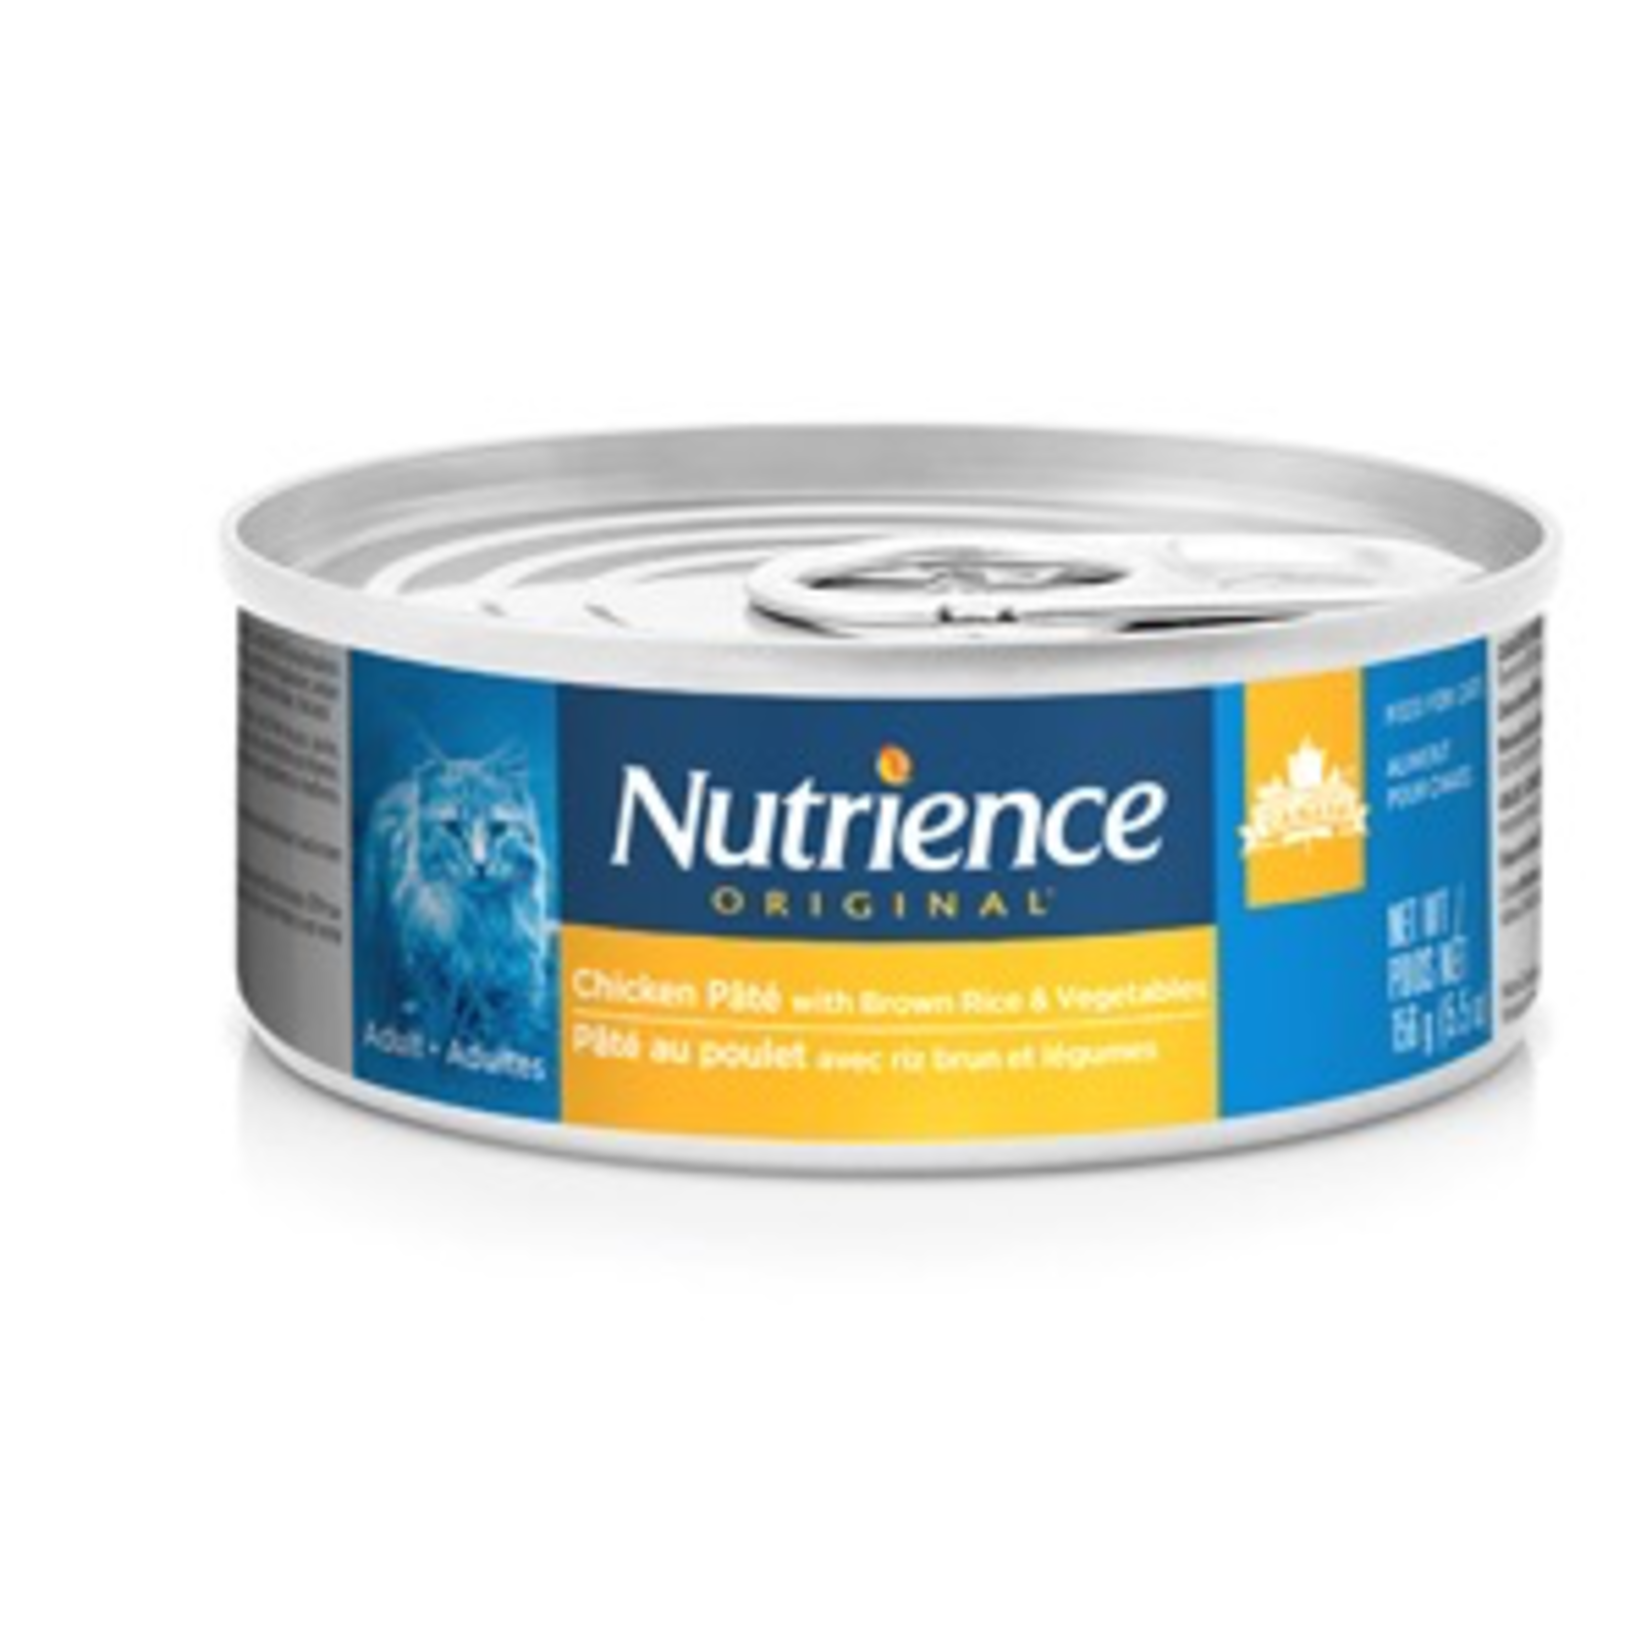 NUTRIENCE Nutrience Original Healthy Adult - Chicken Pâté with Brown Rice & Vegetables - 156 g (5.5 oz)